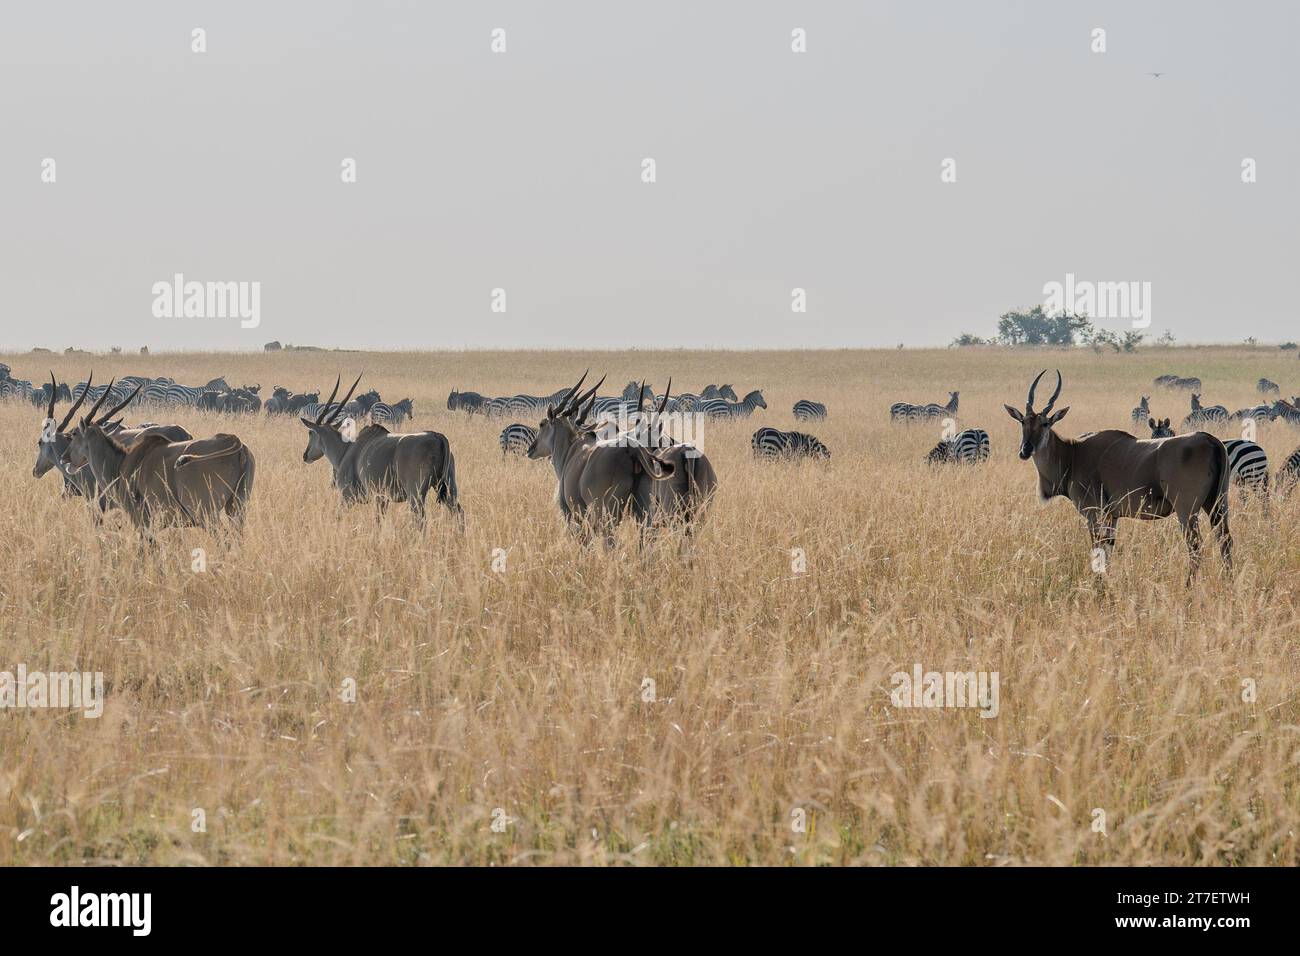 Giant Eland Antelopes in Masai Mara Kenya Africa Stock Photo